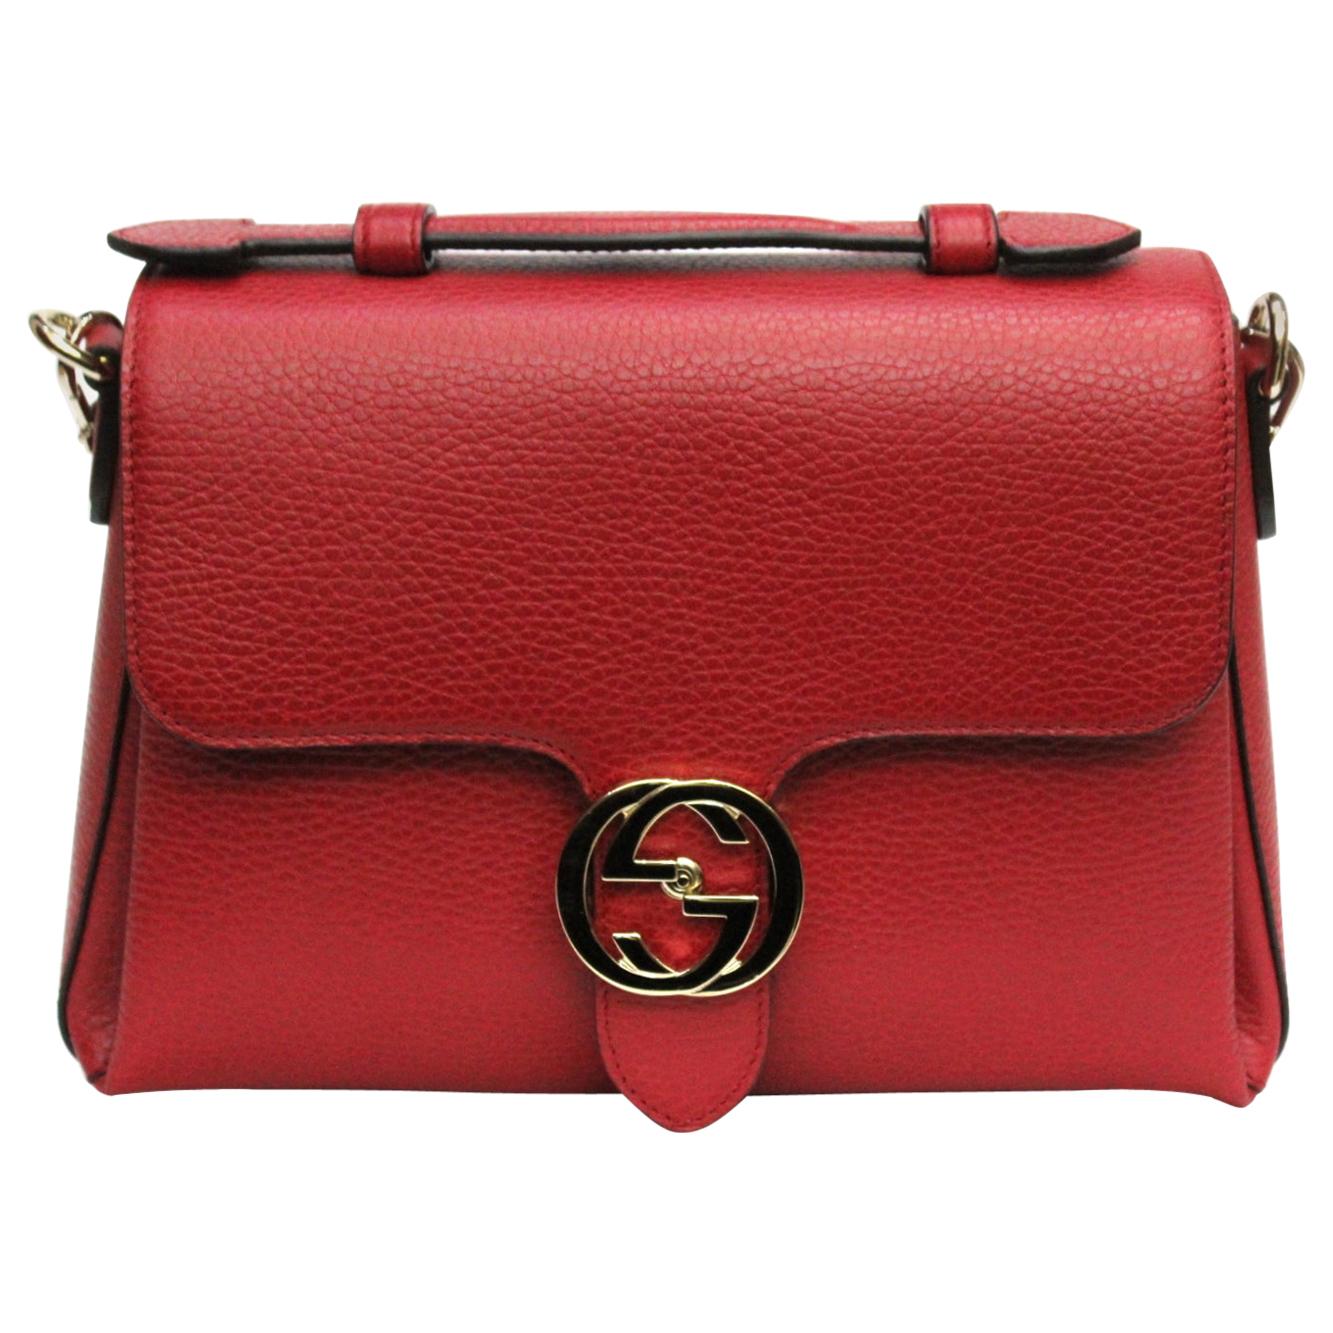 Gucci Red Leather Interlocking Bag